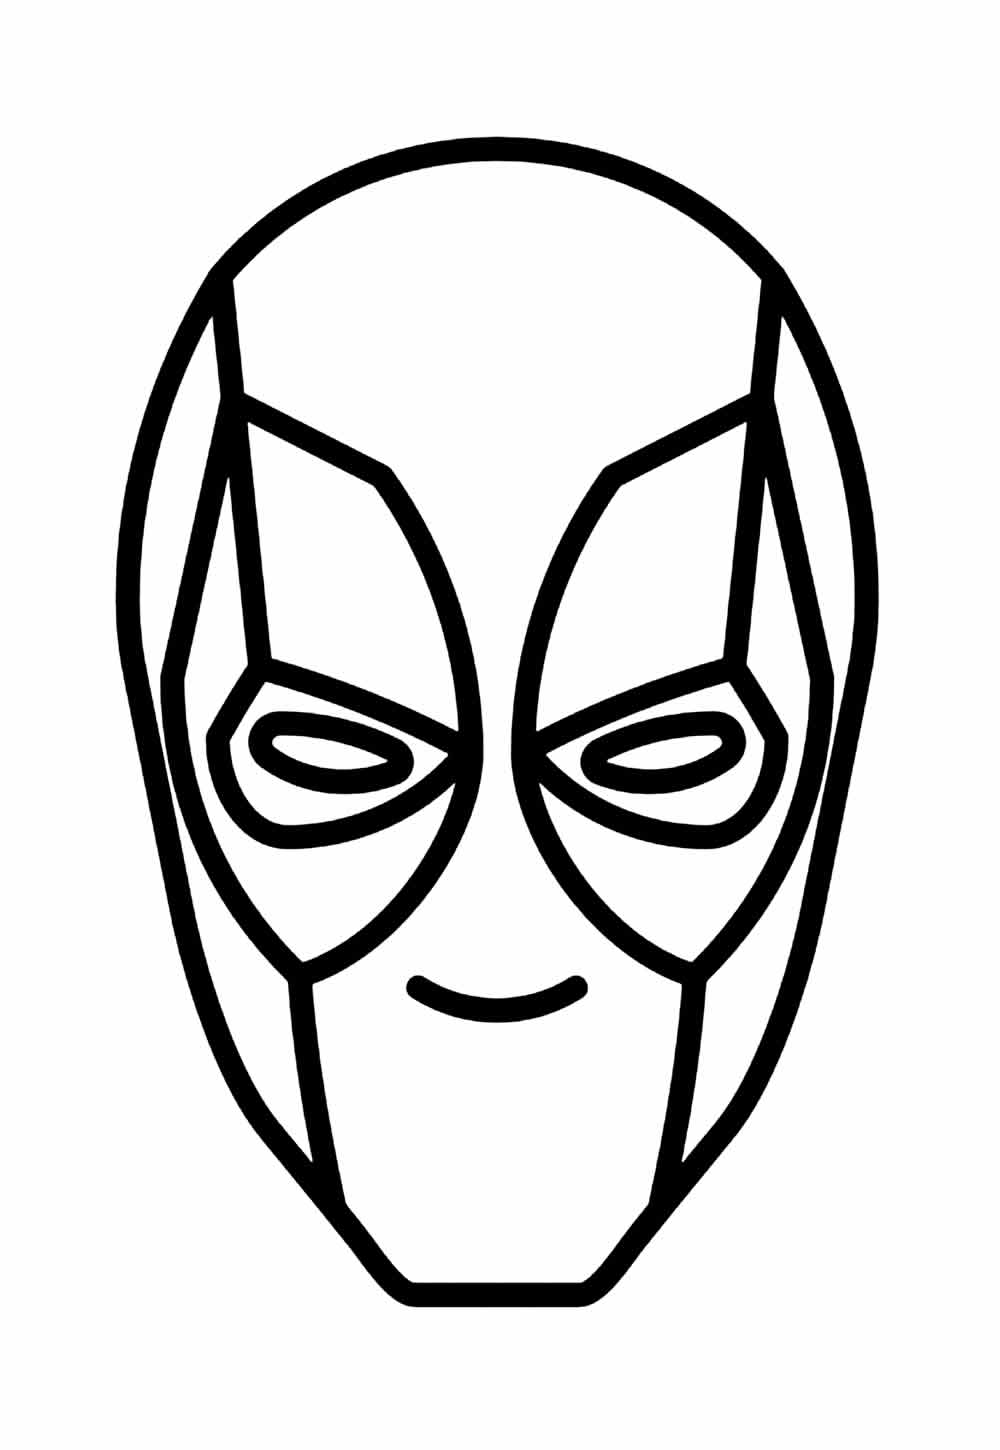 Máscara de Super-herói para imprimir